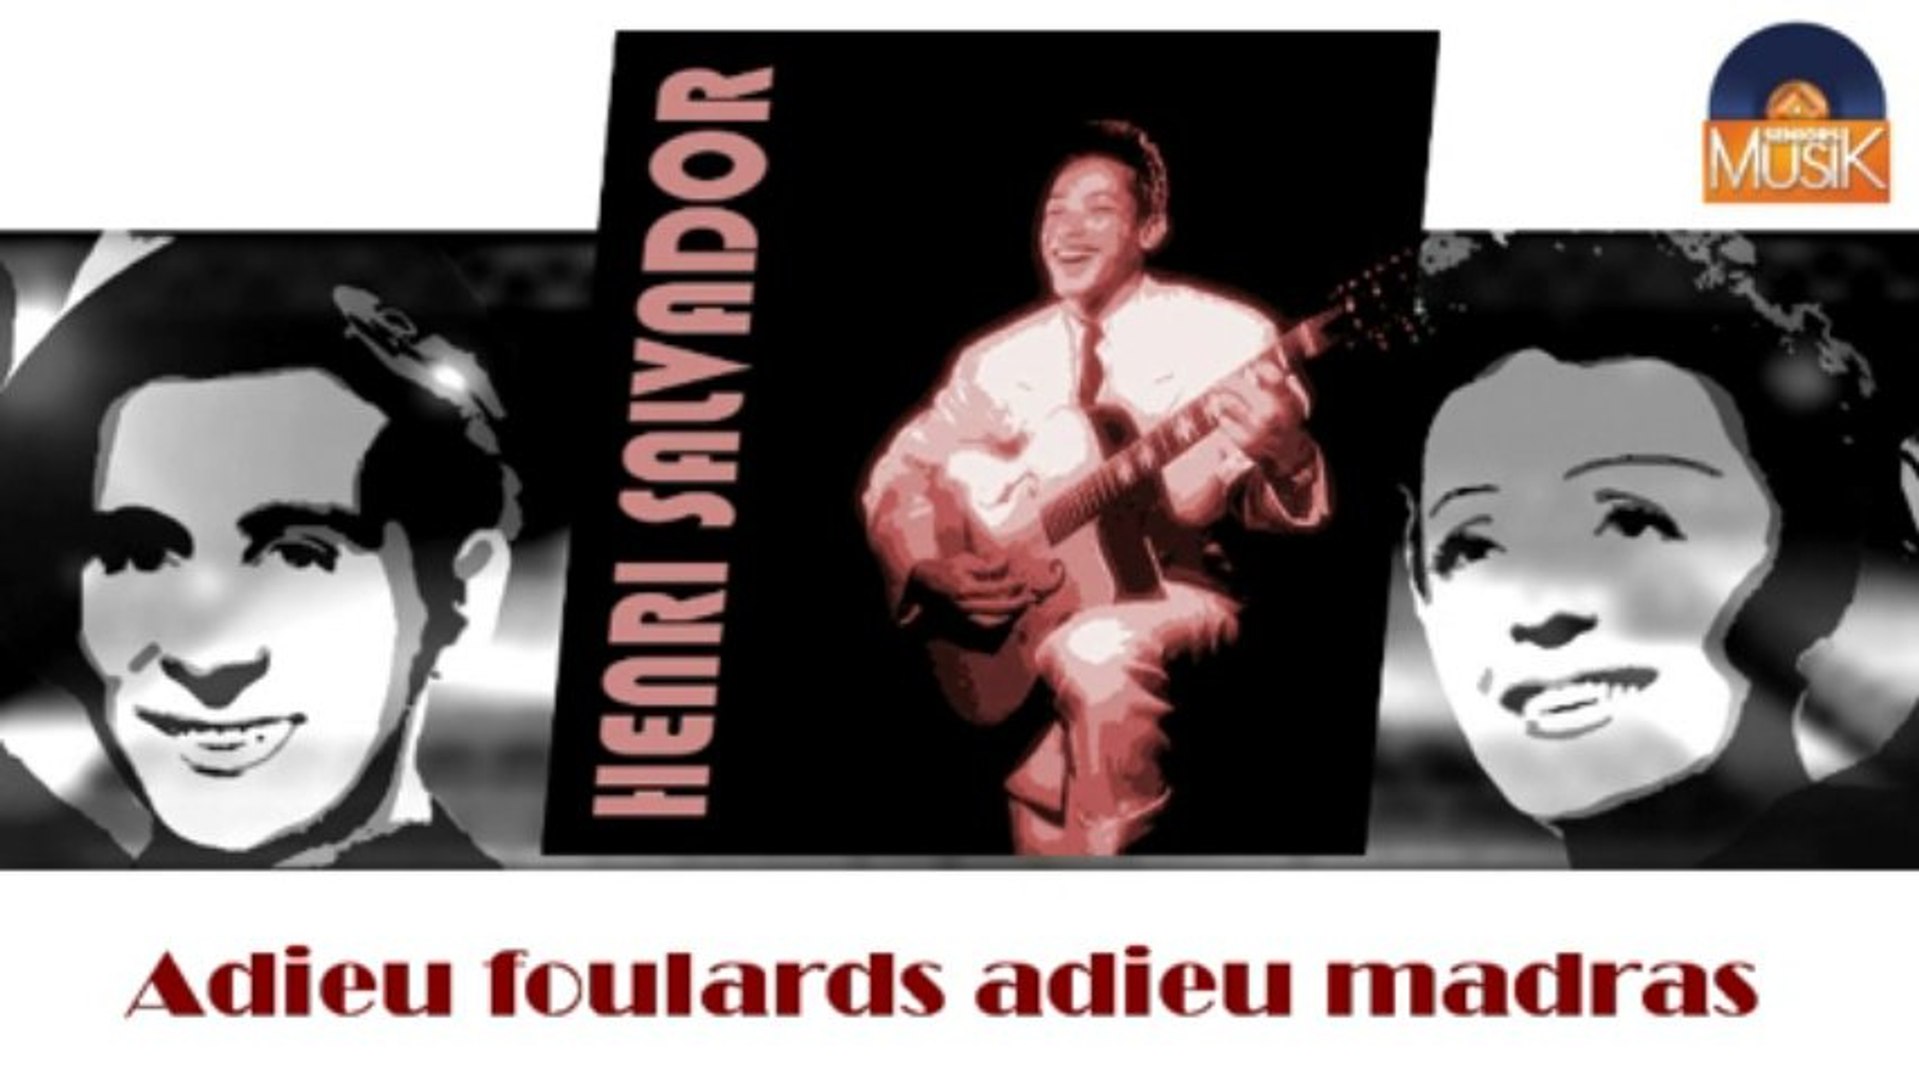 Henri Salvador - Adieu foulards adieu madras (HD) Officiel Seniors Musik -  Vidéo Dailymotion